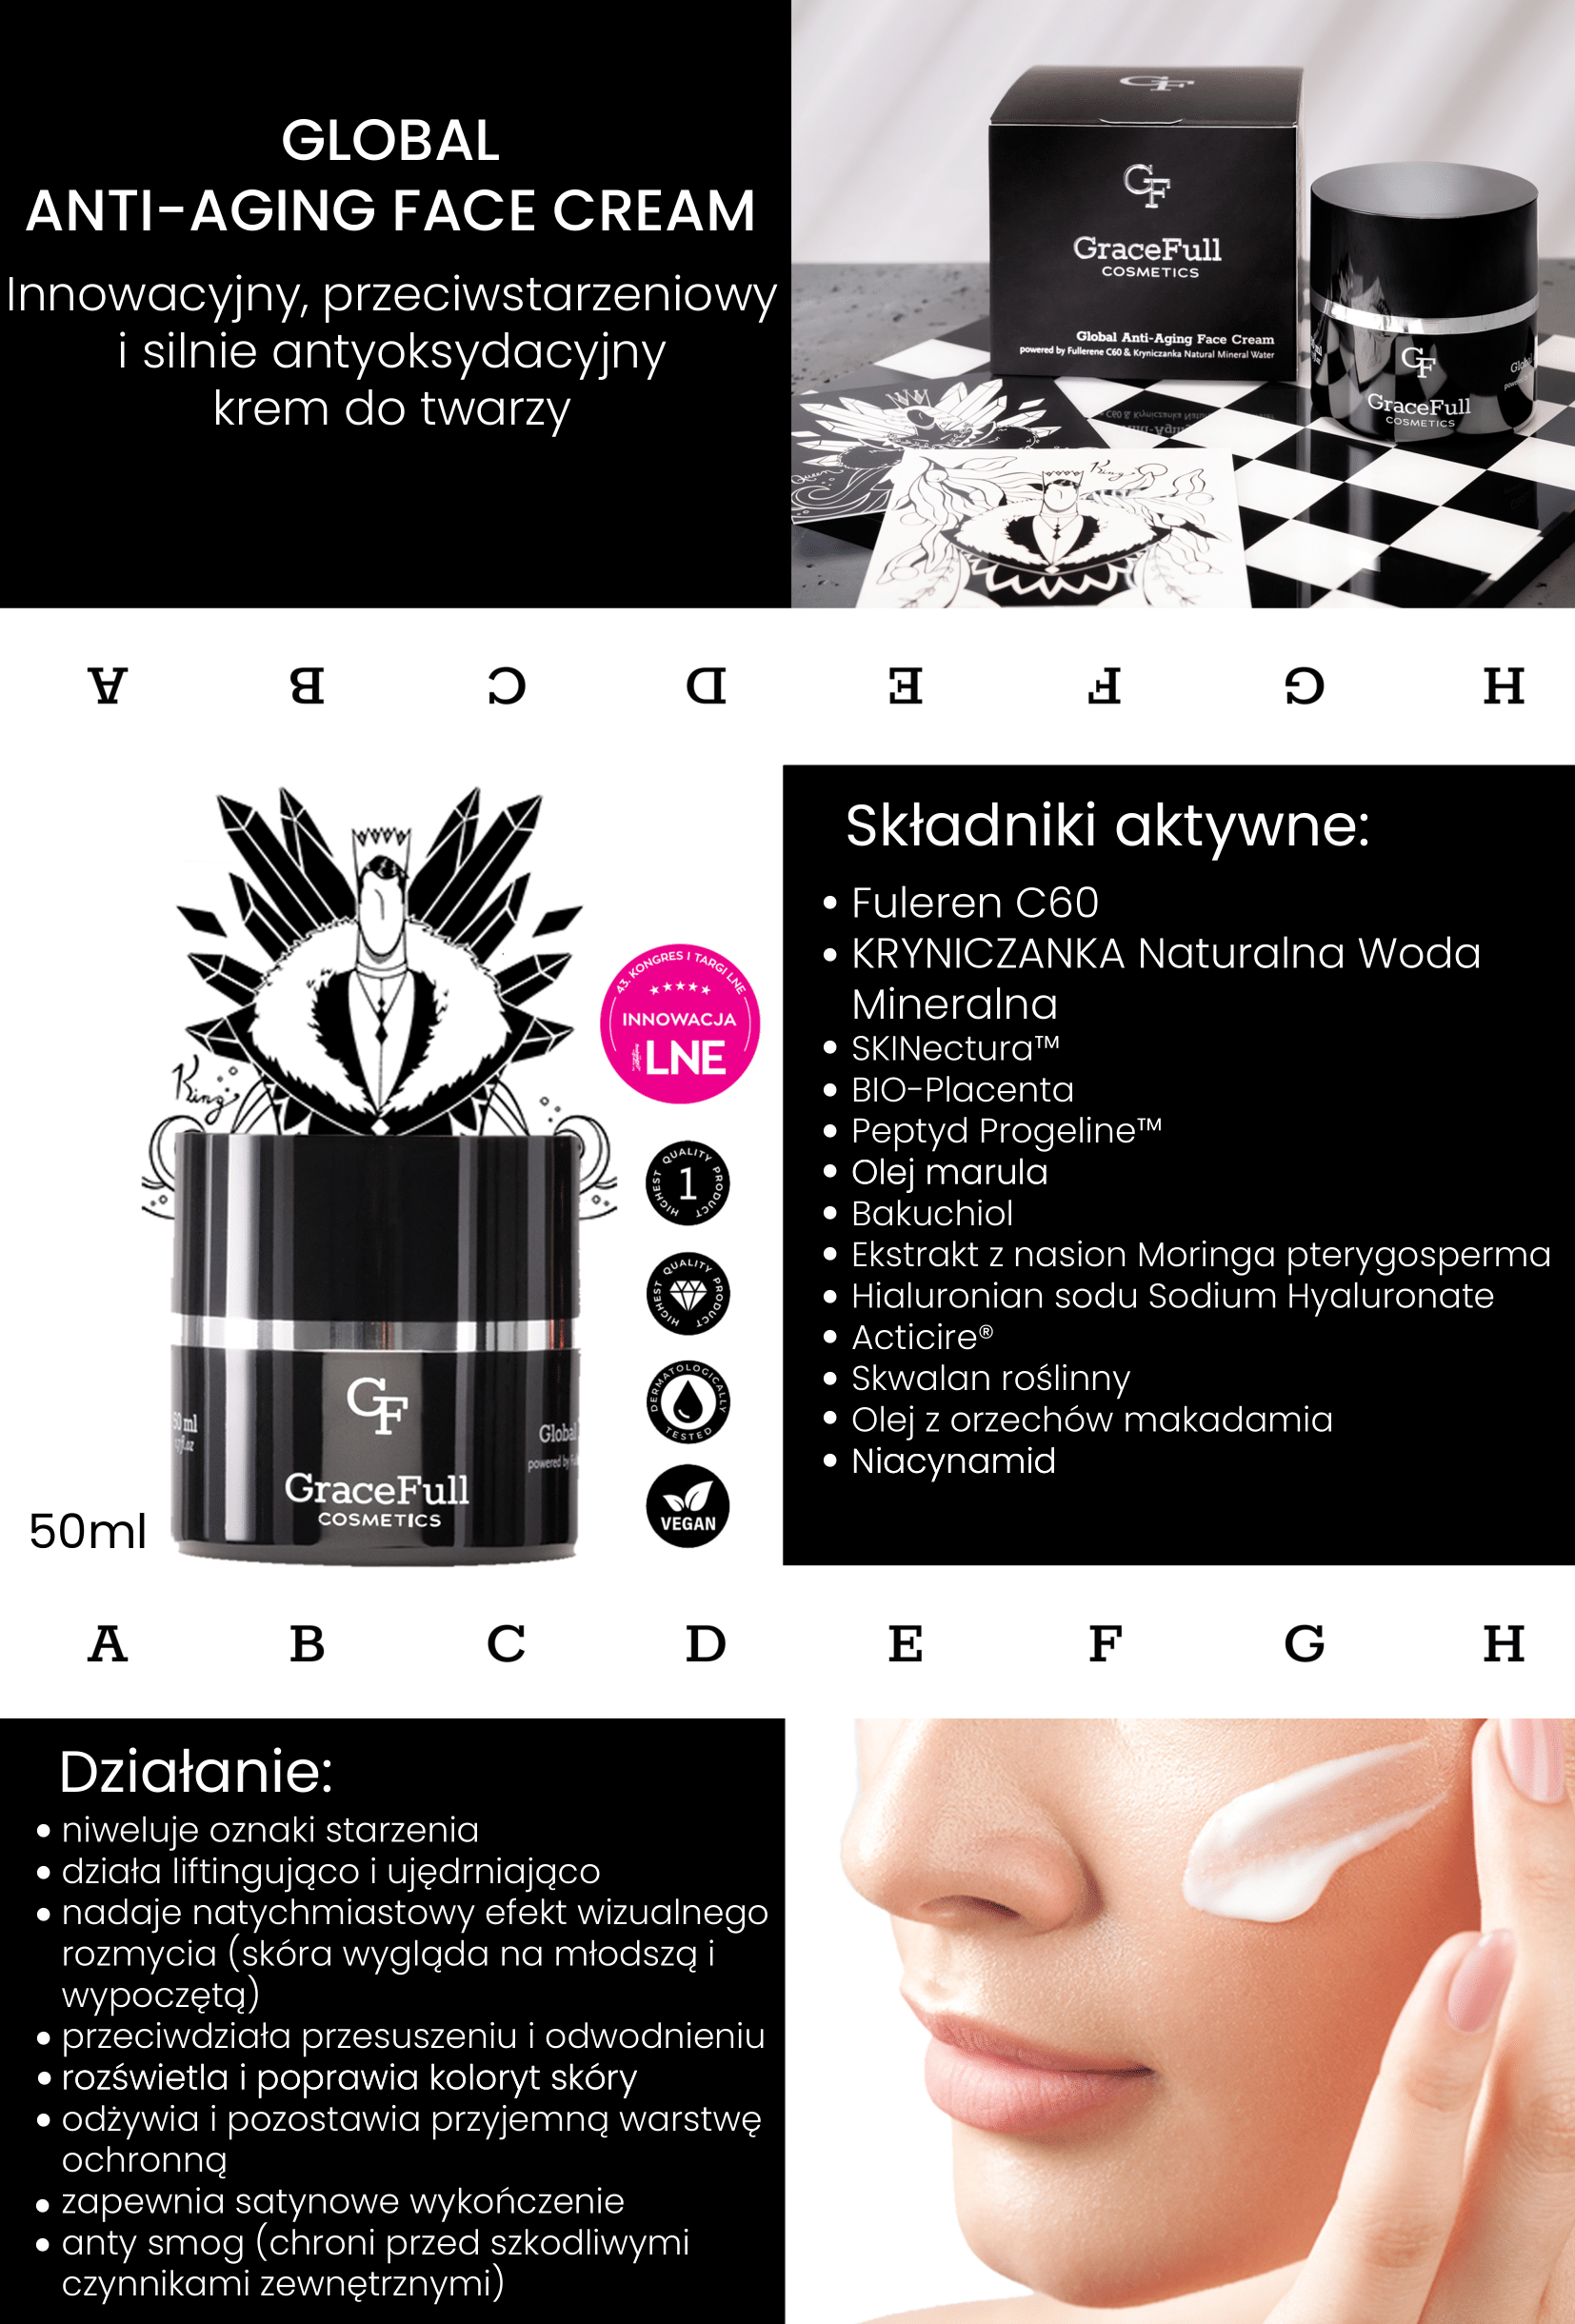 GraceFull Cosmetics-full info-4png